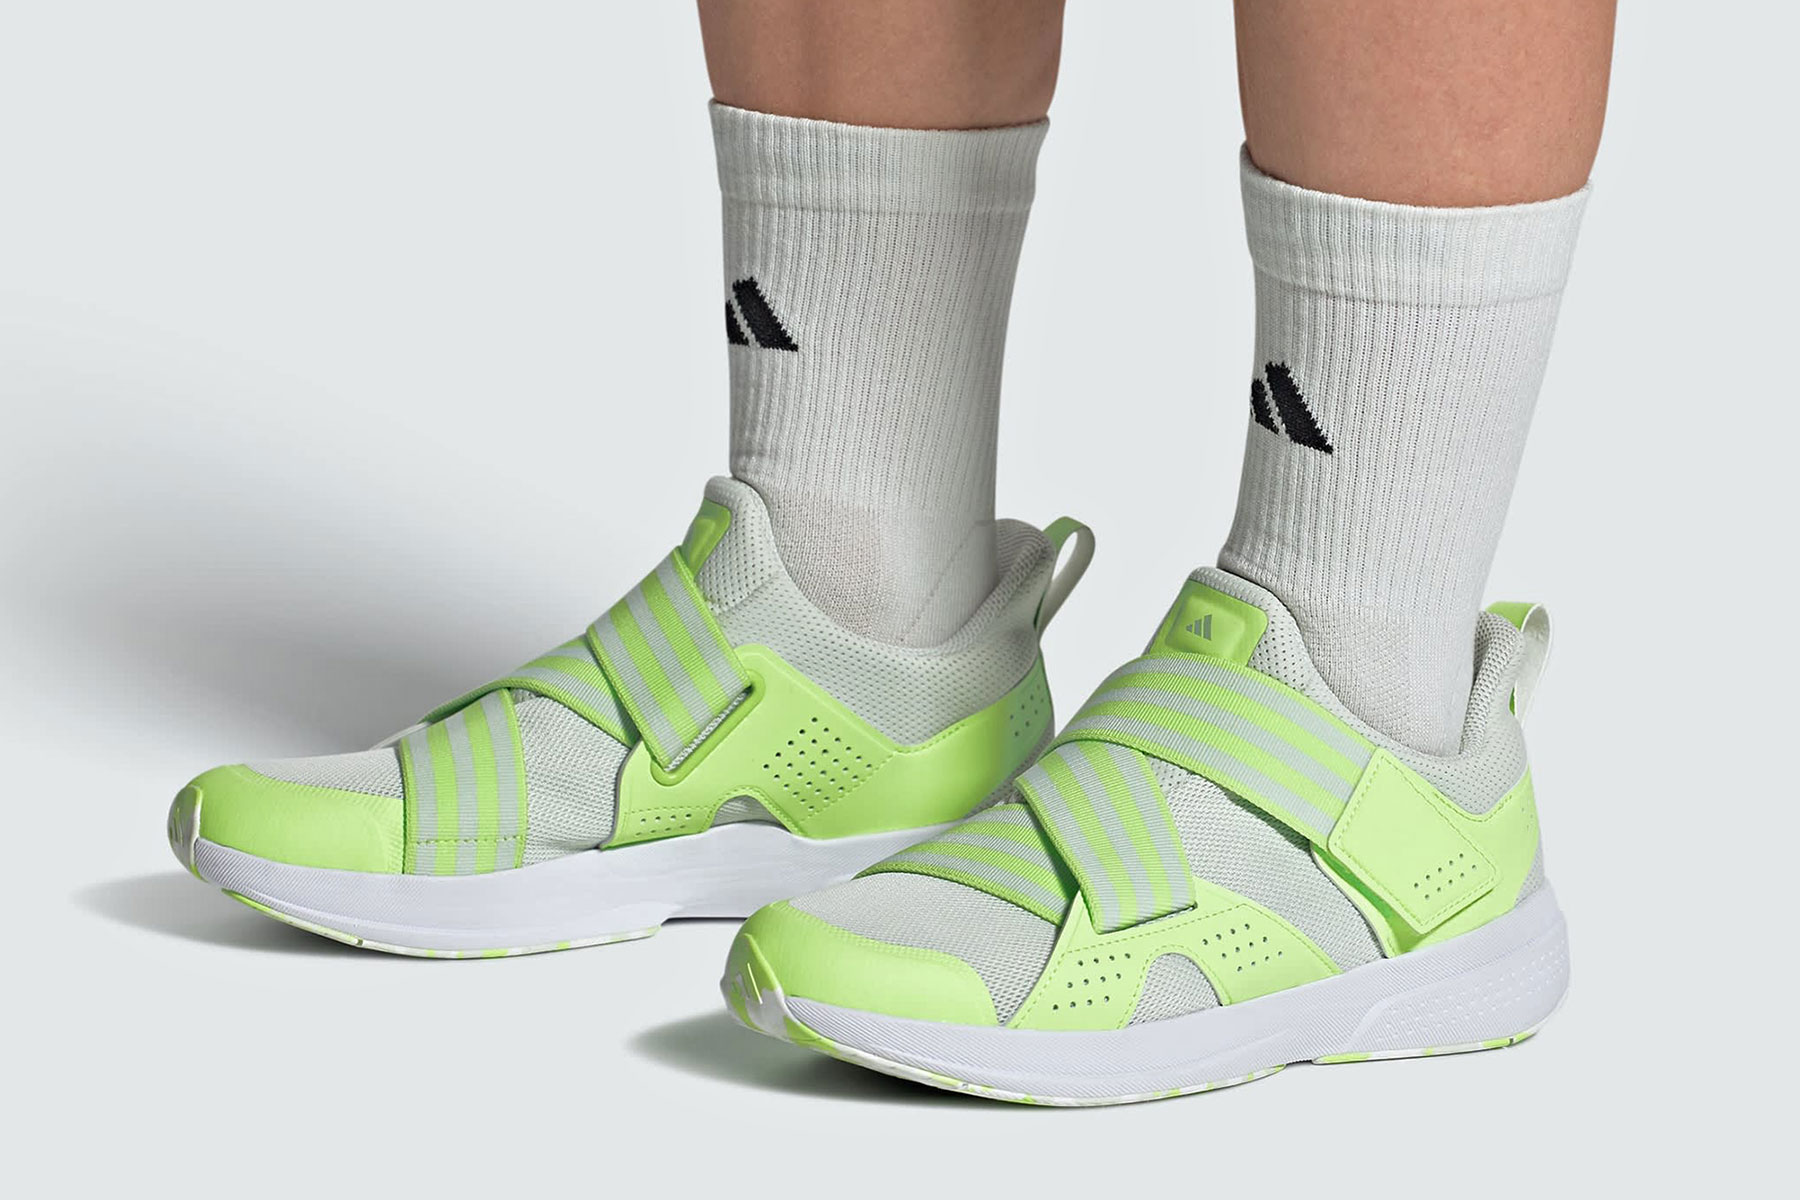 Adidas Velocade walkable mesh indoor cycling shoes, German socks & sandals